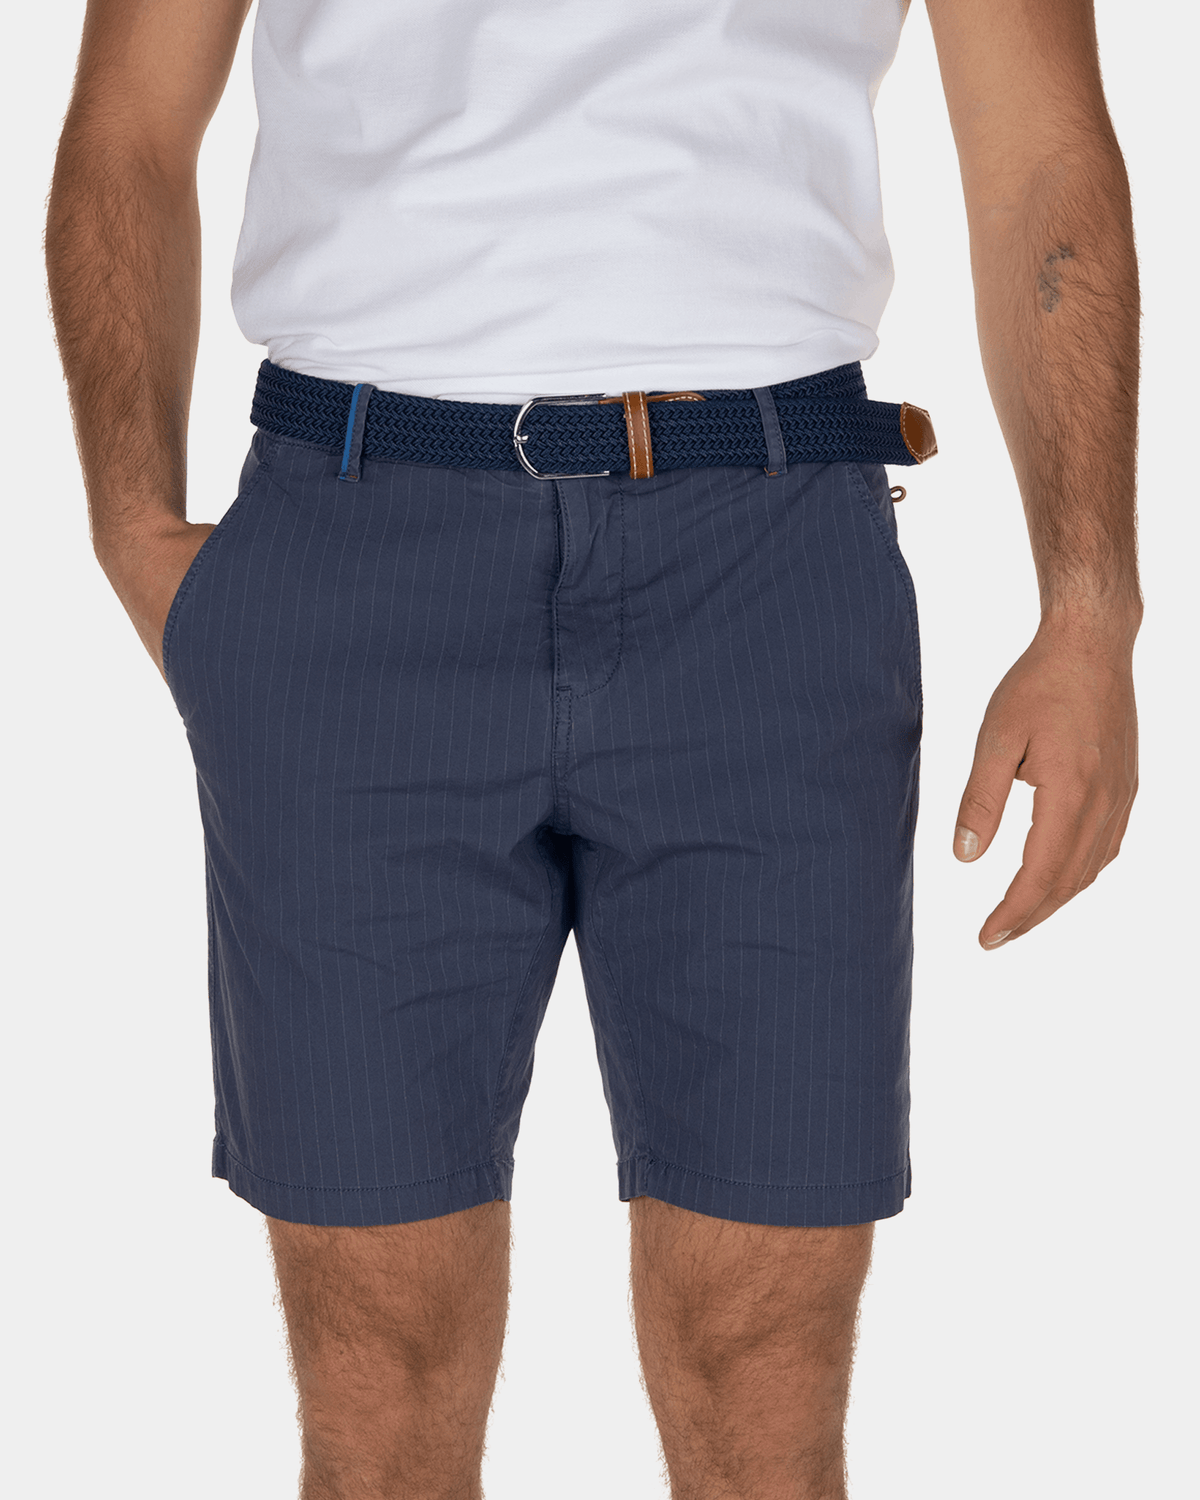 Whitby cargo short pants - Kind Navy